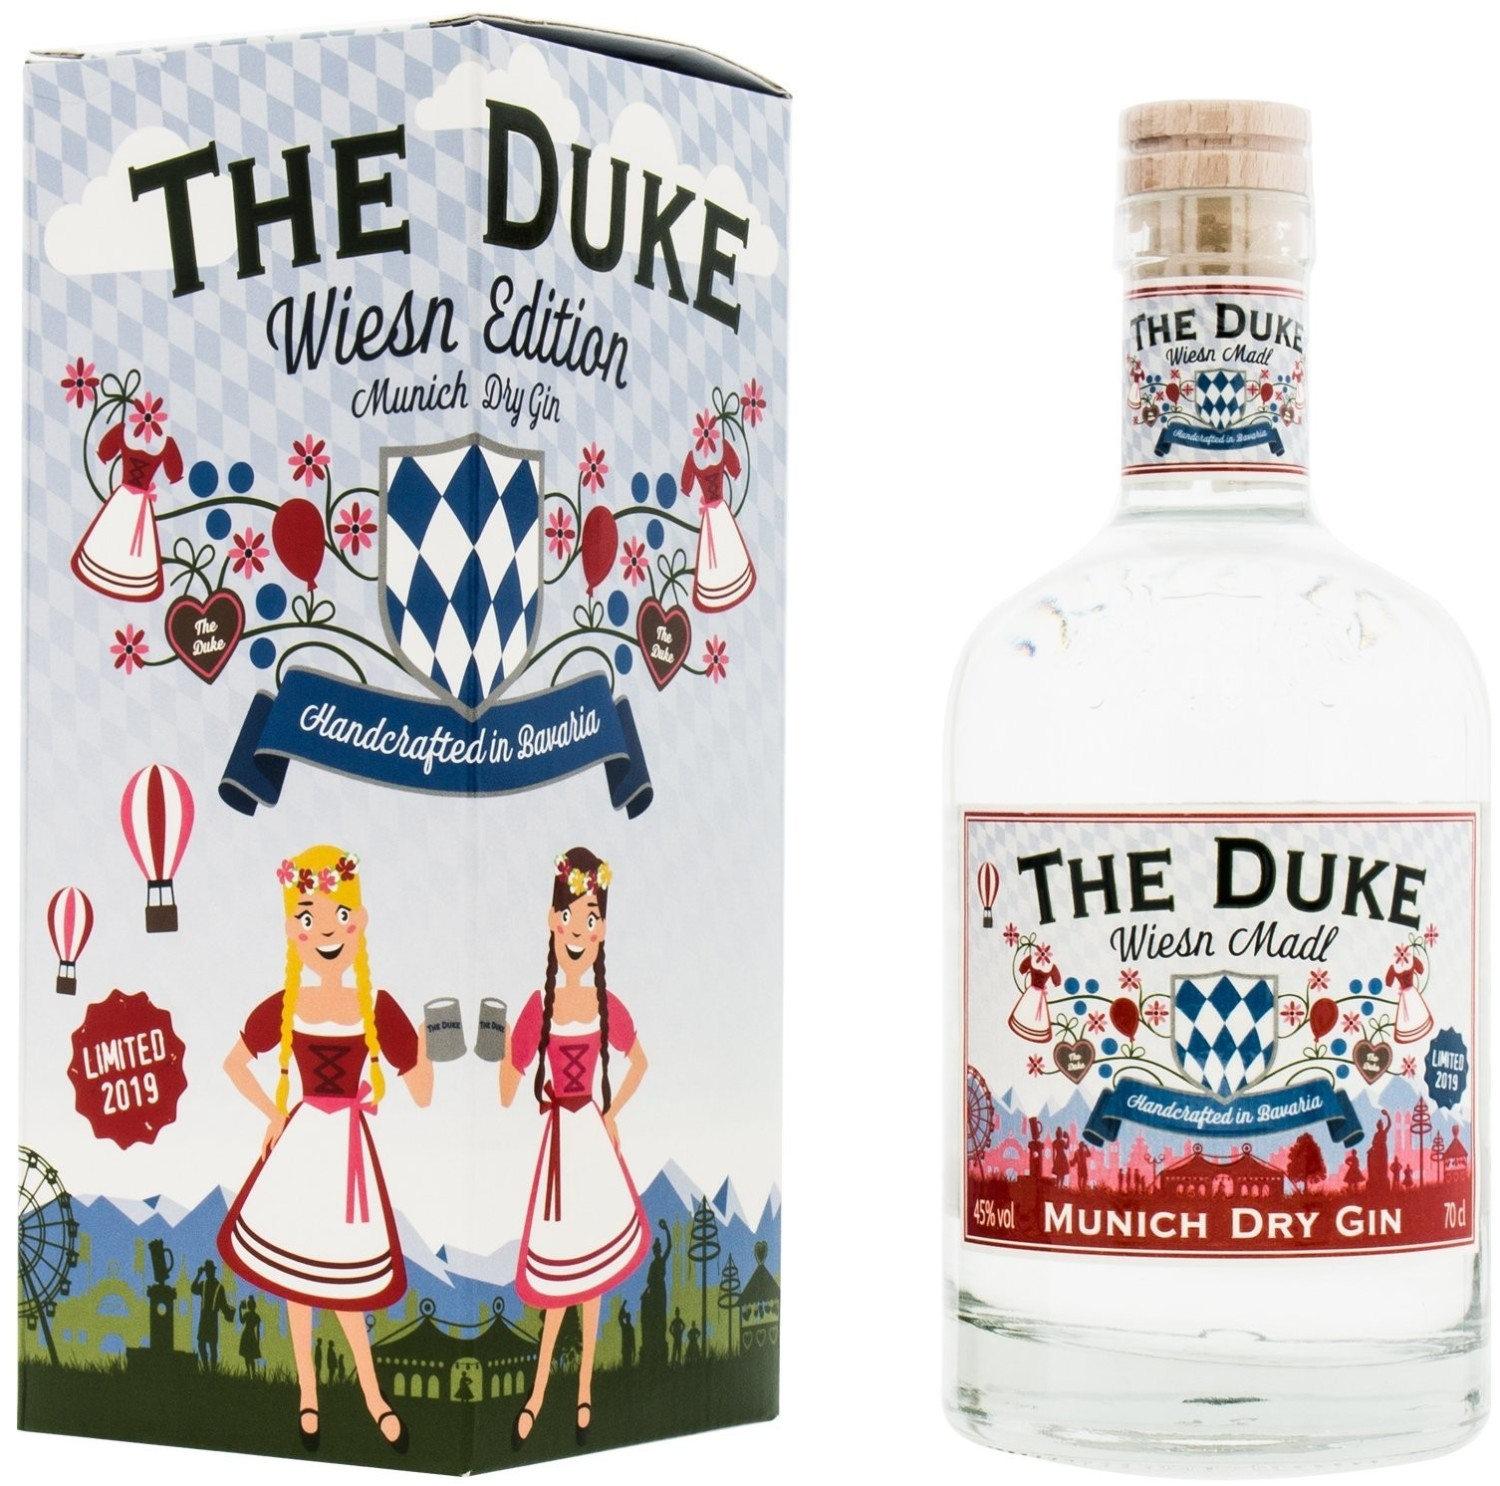 The Duke Munich | ab Limited 0,7l € Dry Gin 24,99 Wiesn Preisvergleich 2019 bei Madl 45% Edition